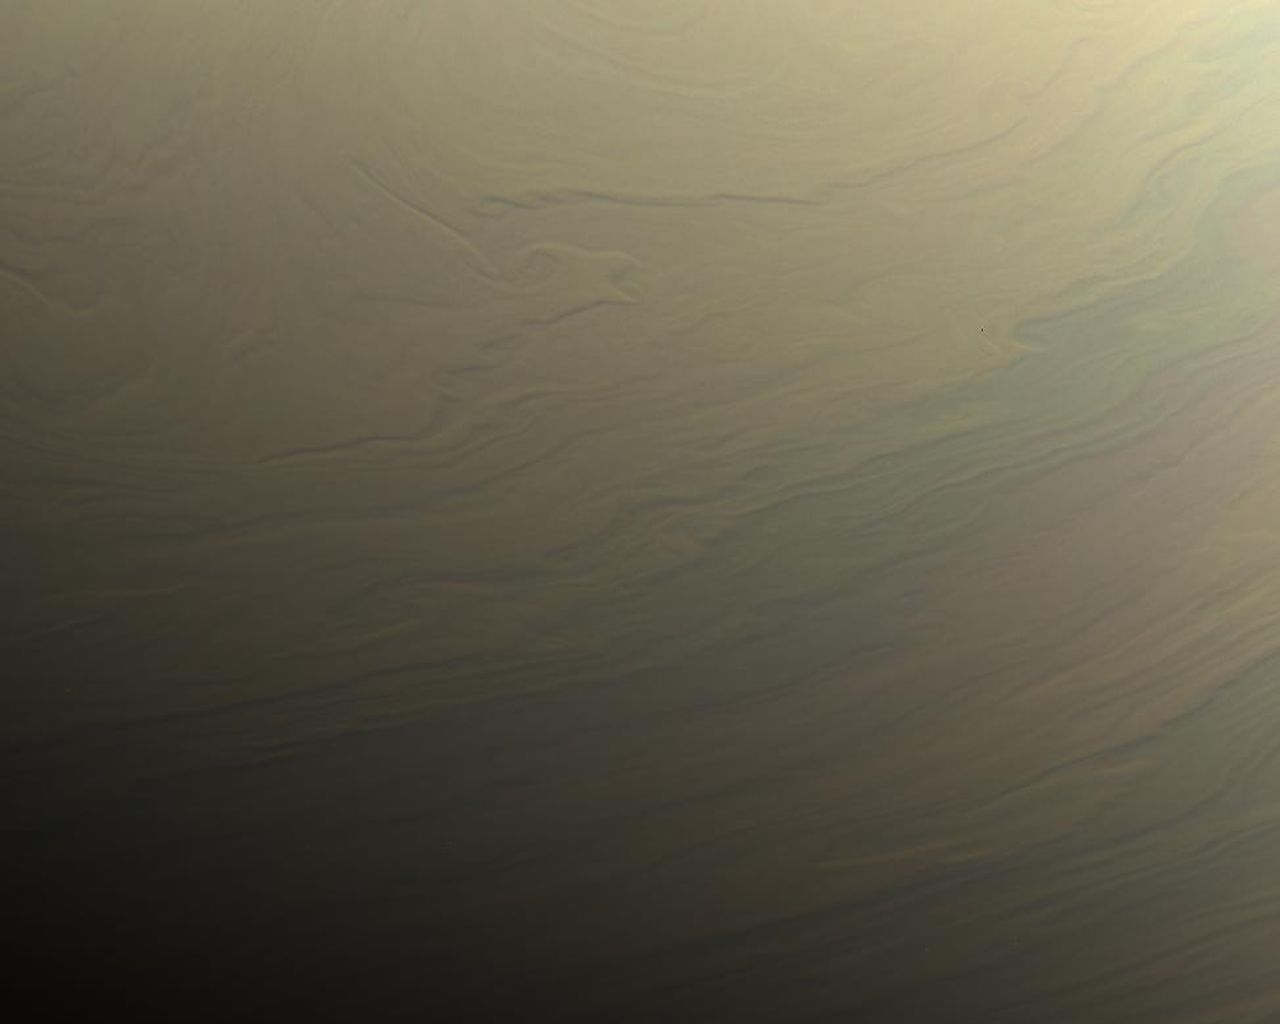 Space Image Dreamy Swirls On Saturn